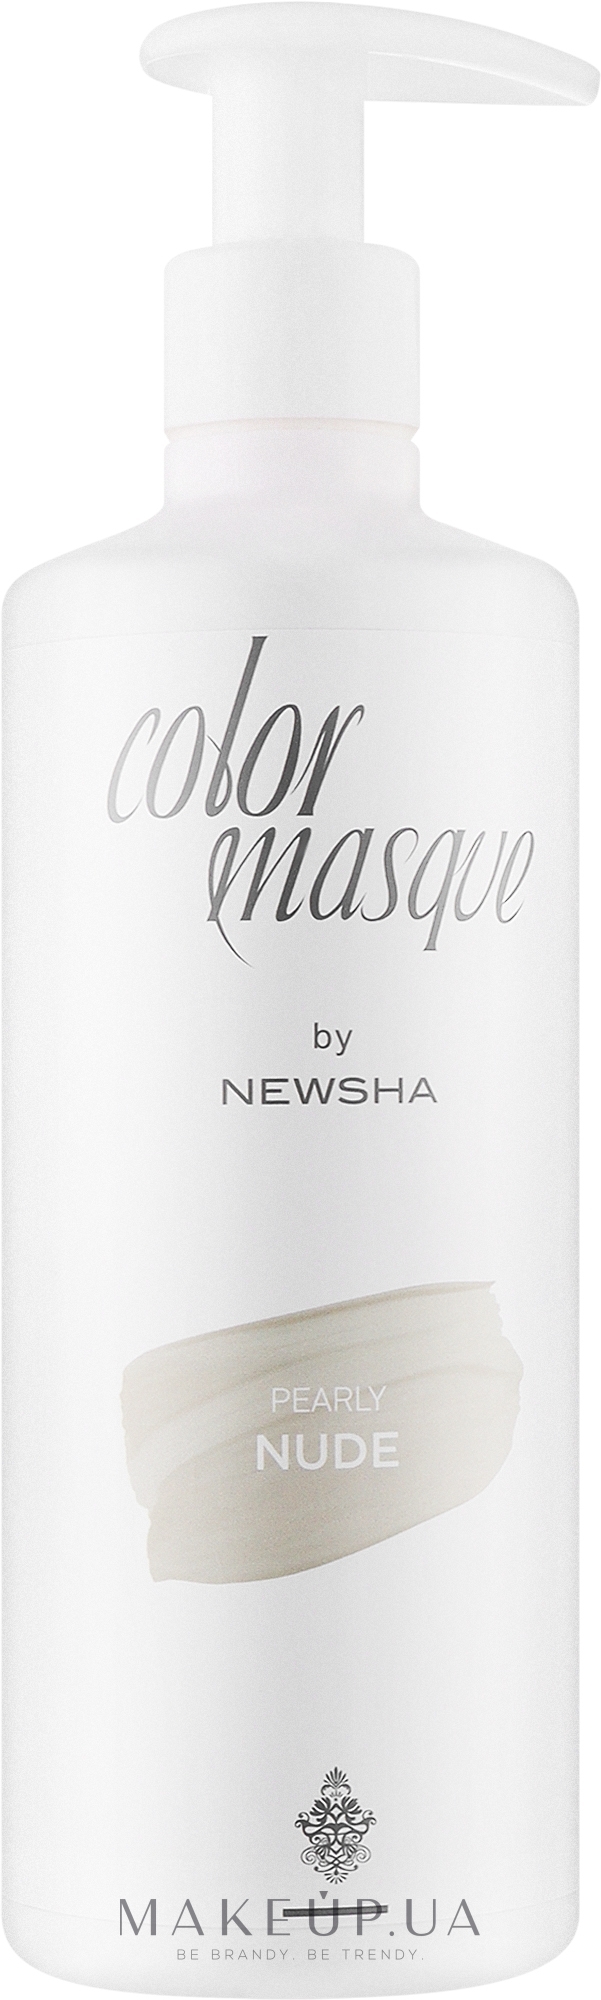 Кольорова маска для волосся - Newsha Color Masque Pearly Nude — фото 500ml